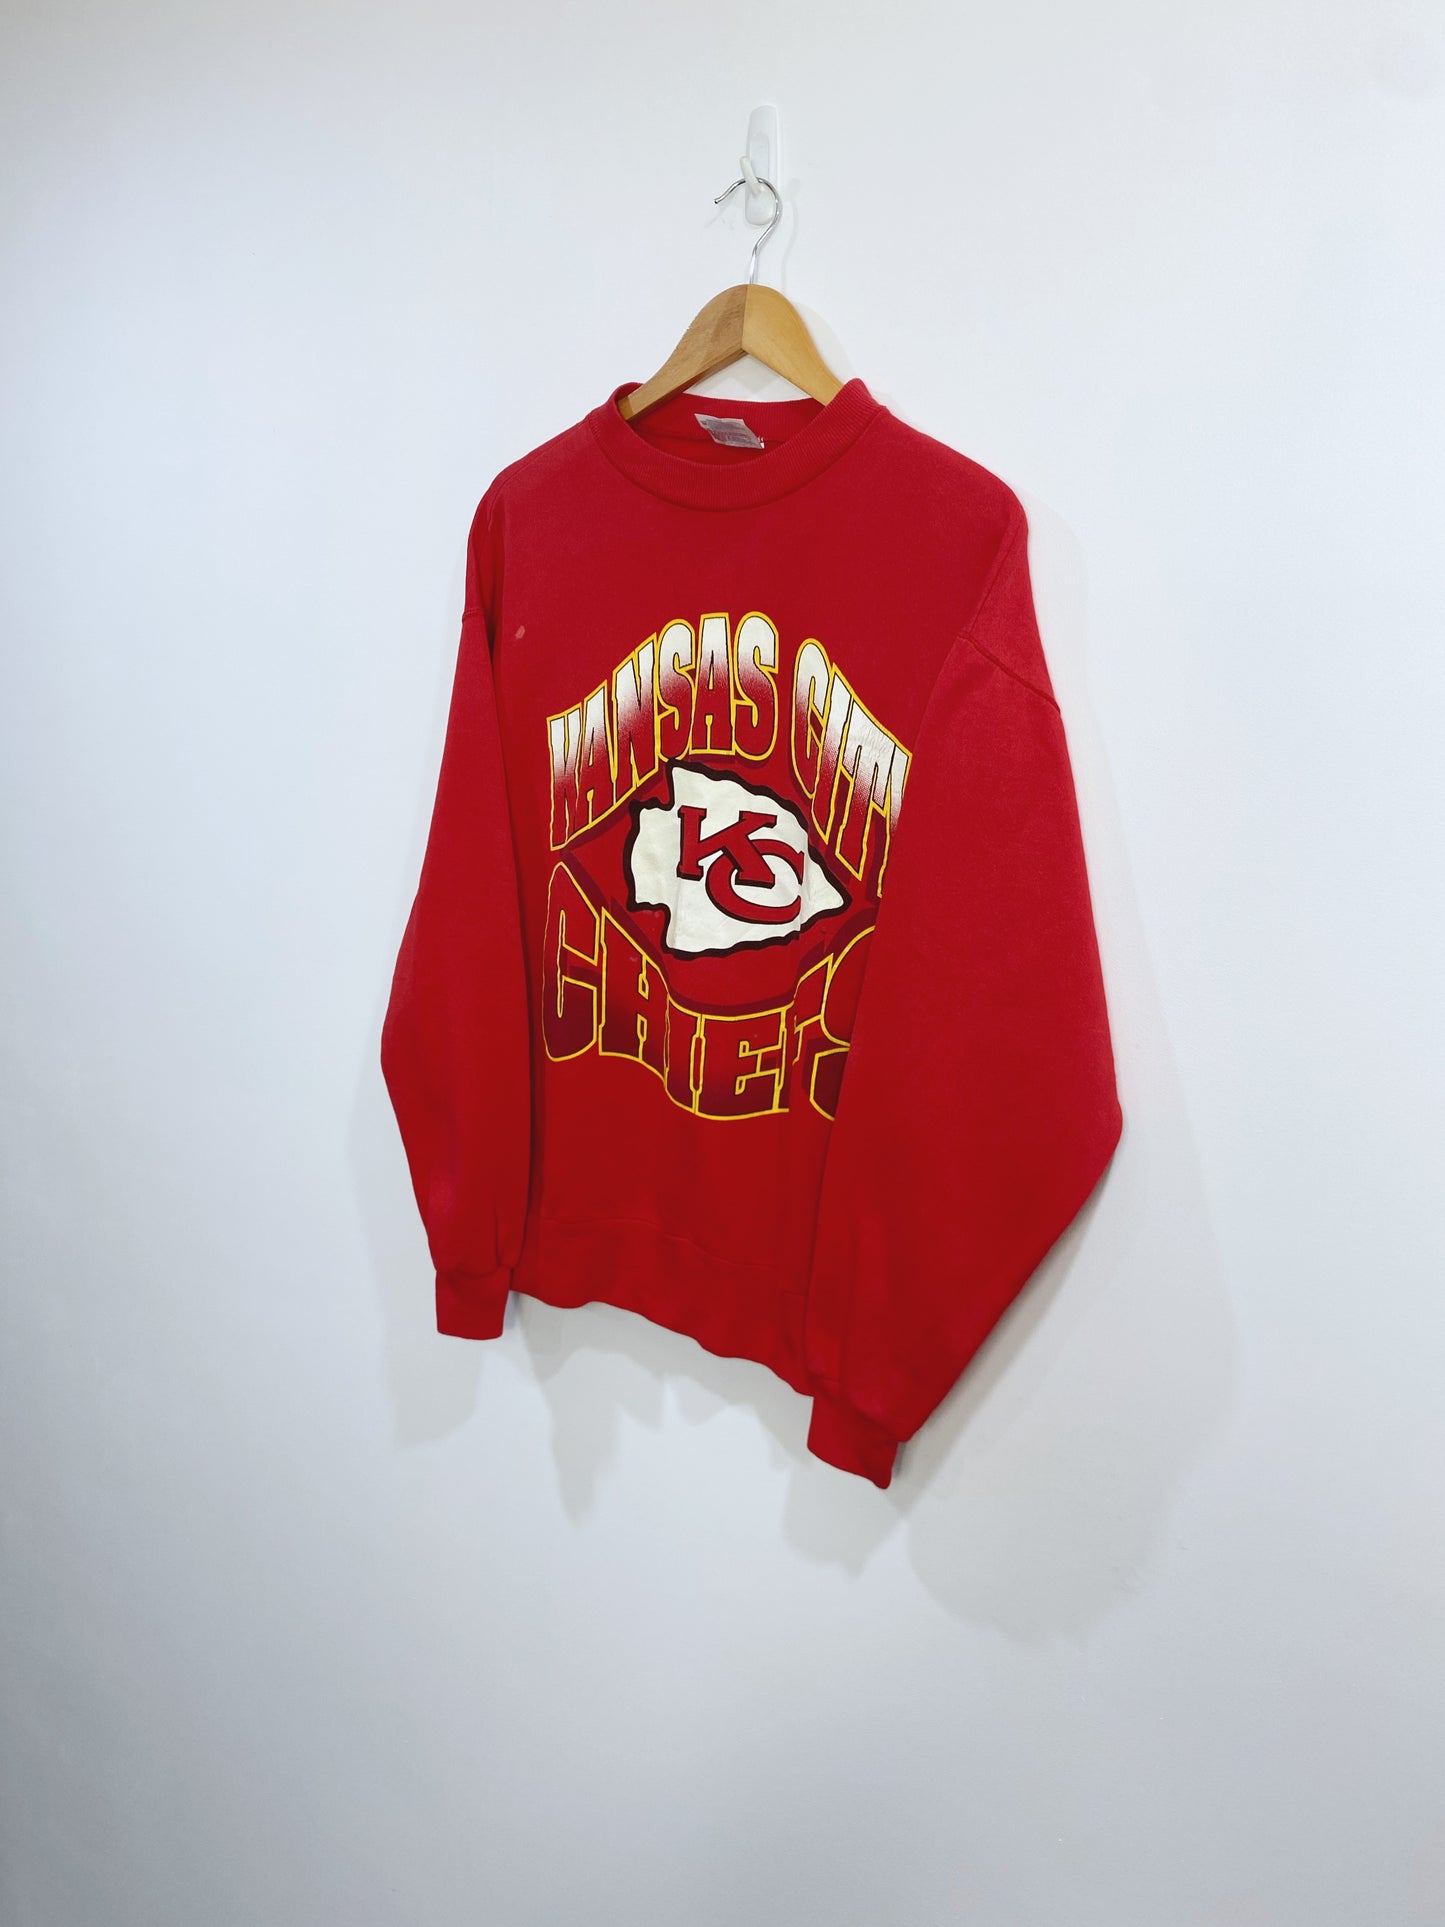 Vintage 1995 Kansas City Chiefs Sweatshirt M